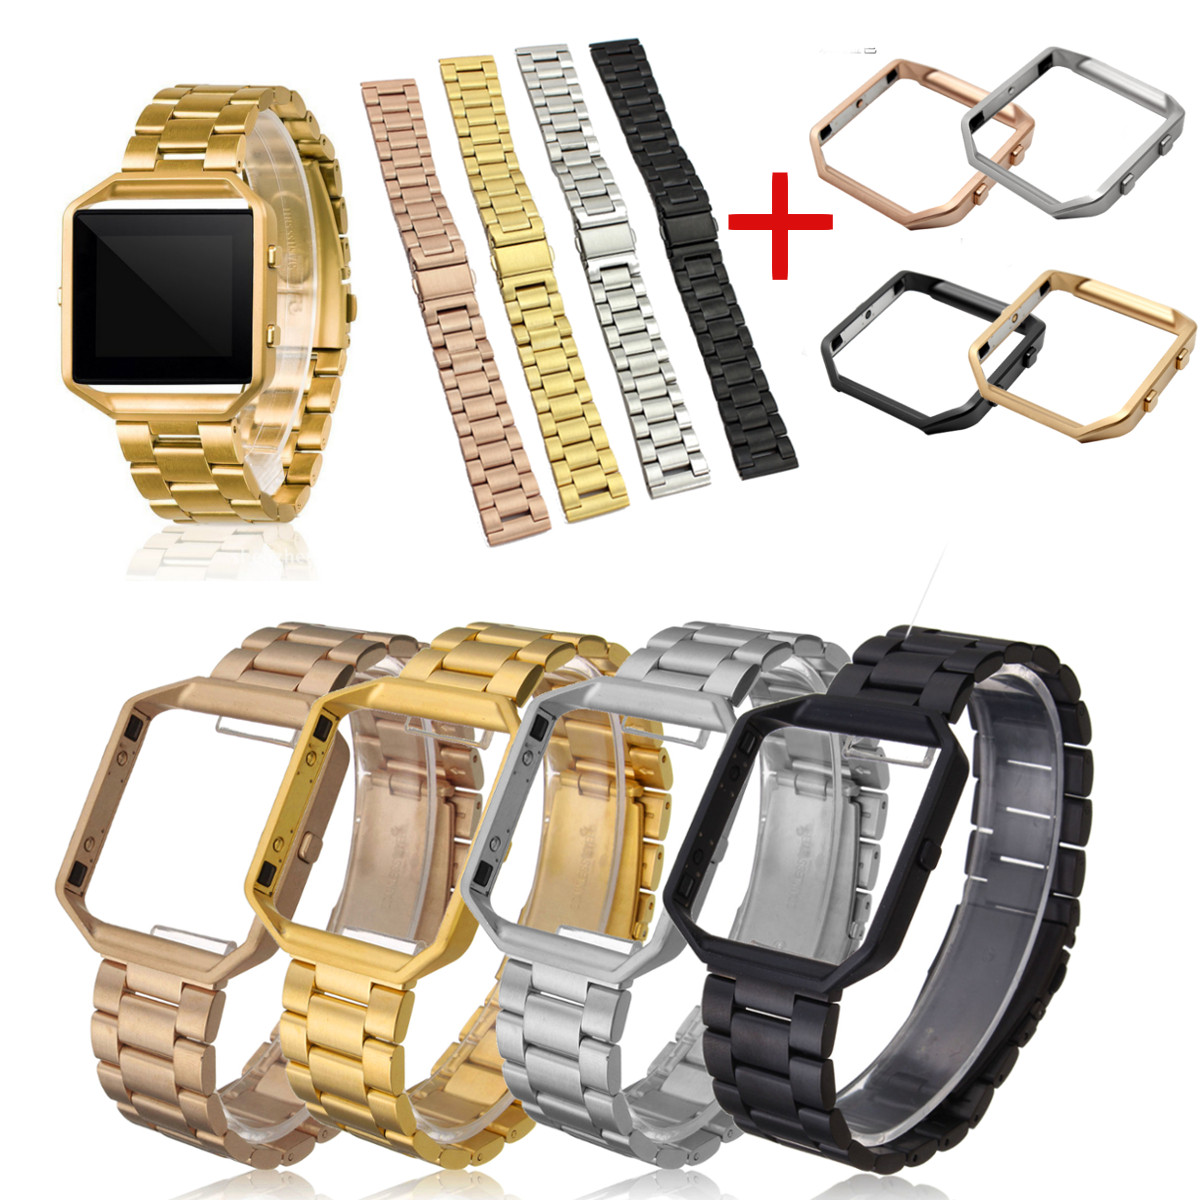 

Stainless Steel Bracelet Wrist Band+Metal Frame For Fitbit Blaze Activity Tracker